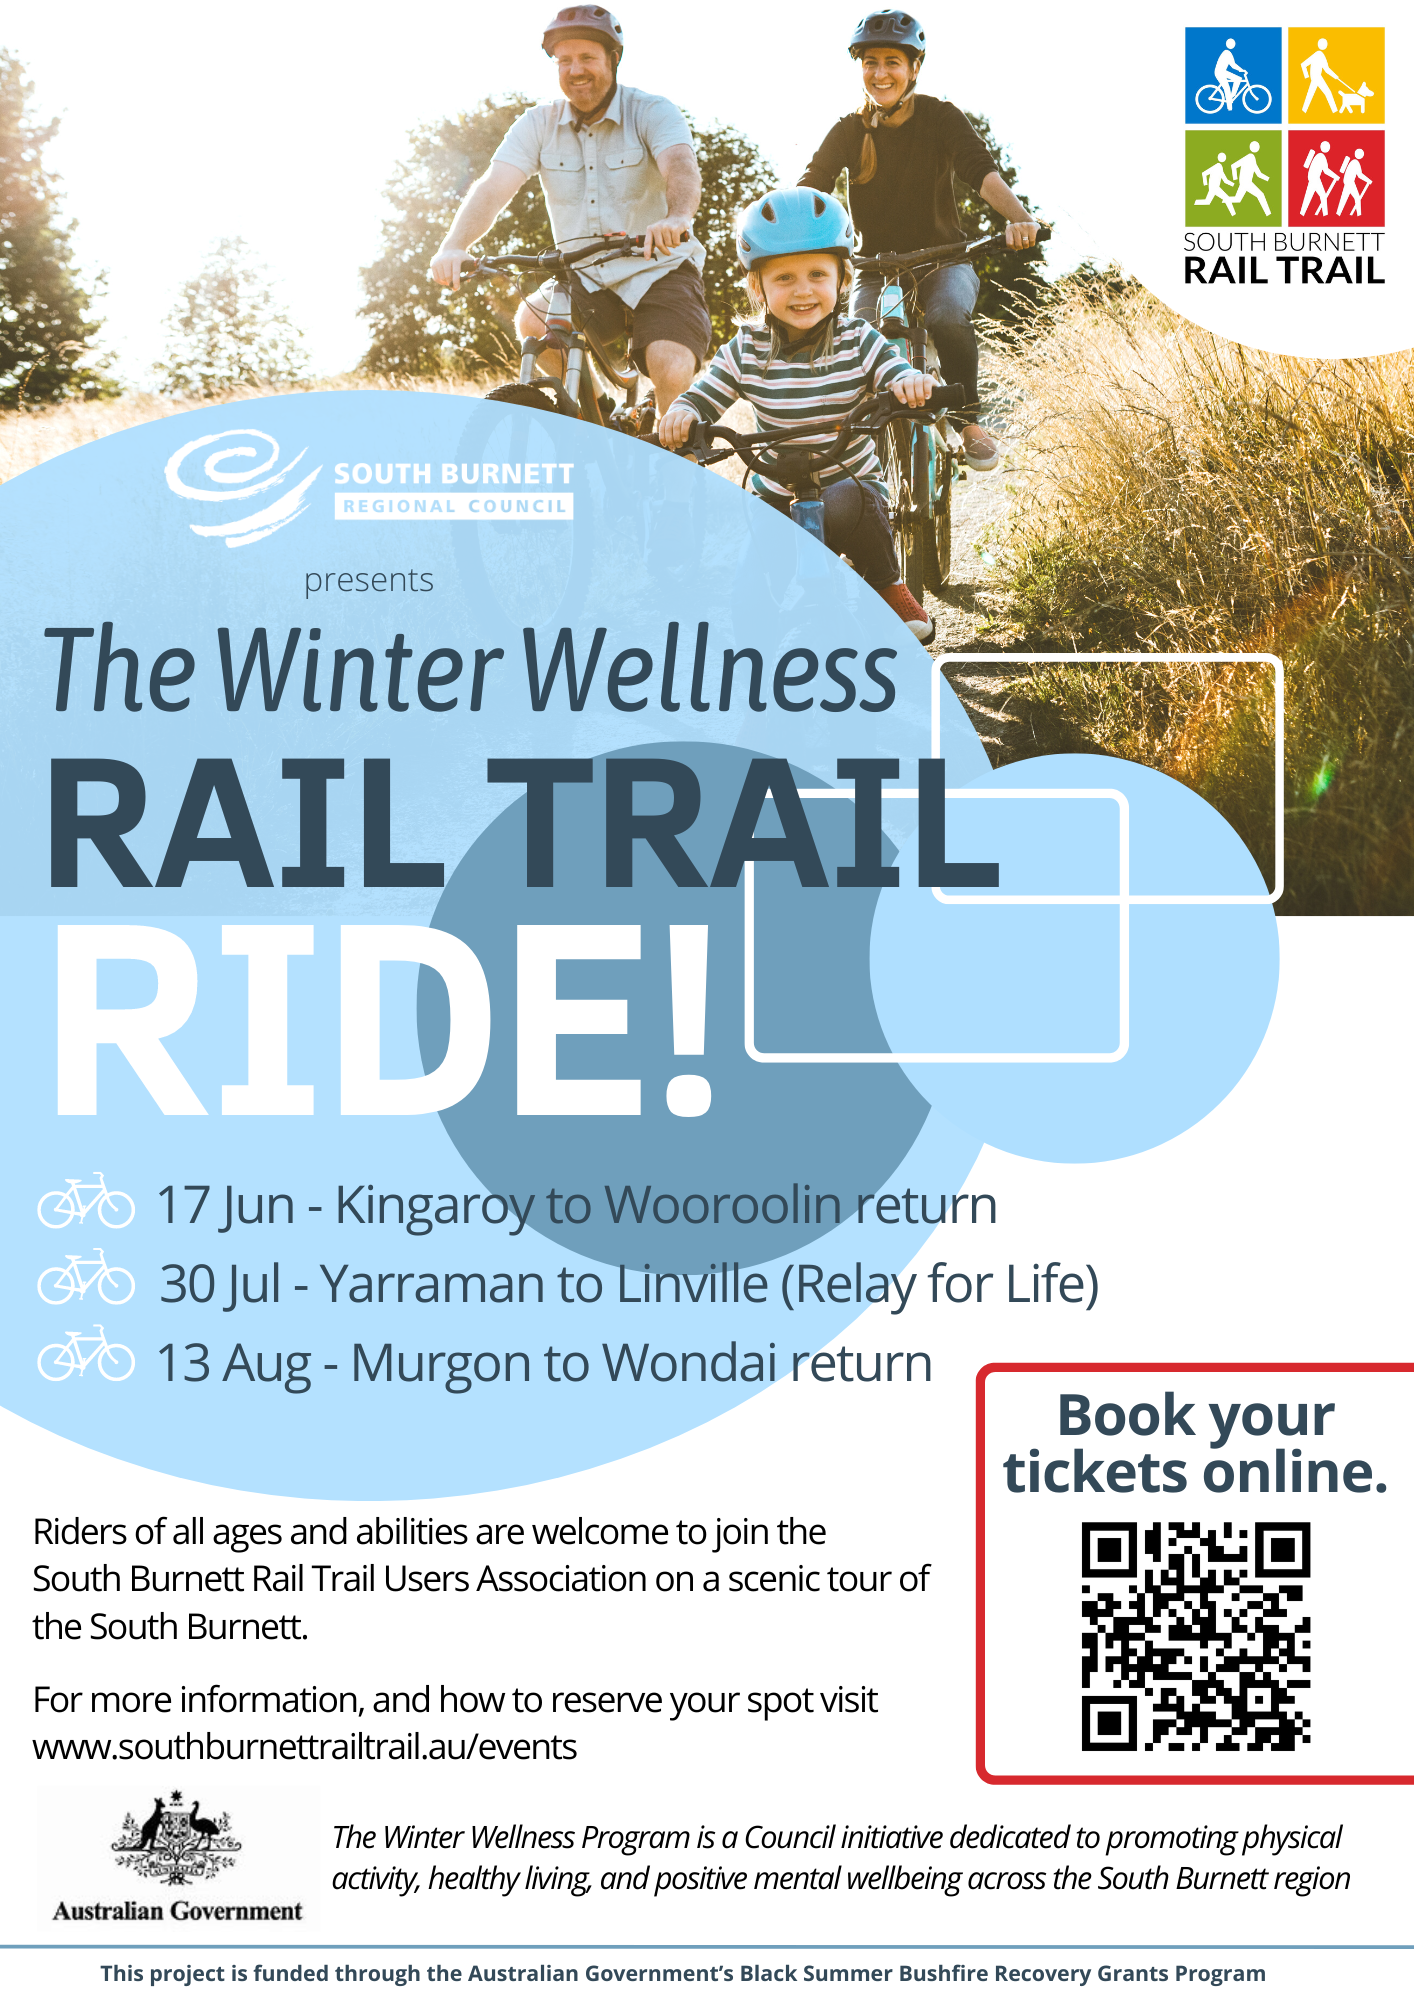 The Winter Wellness Rail Trail Ride